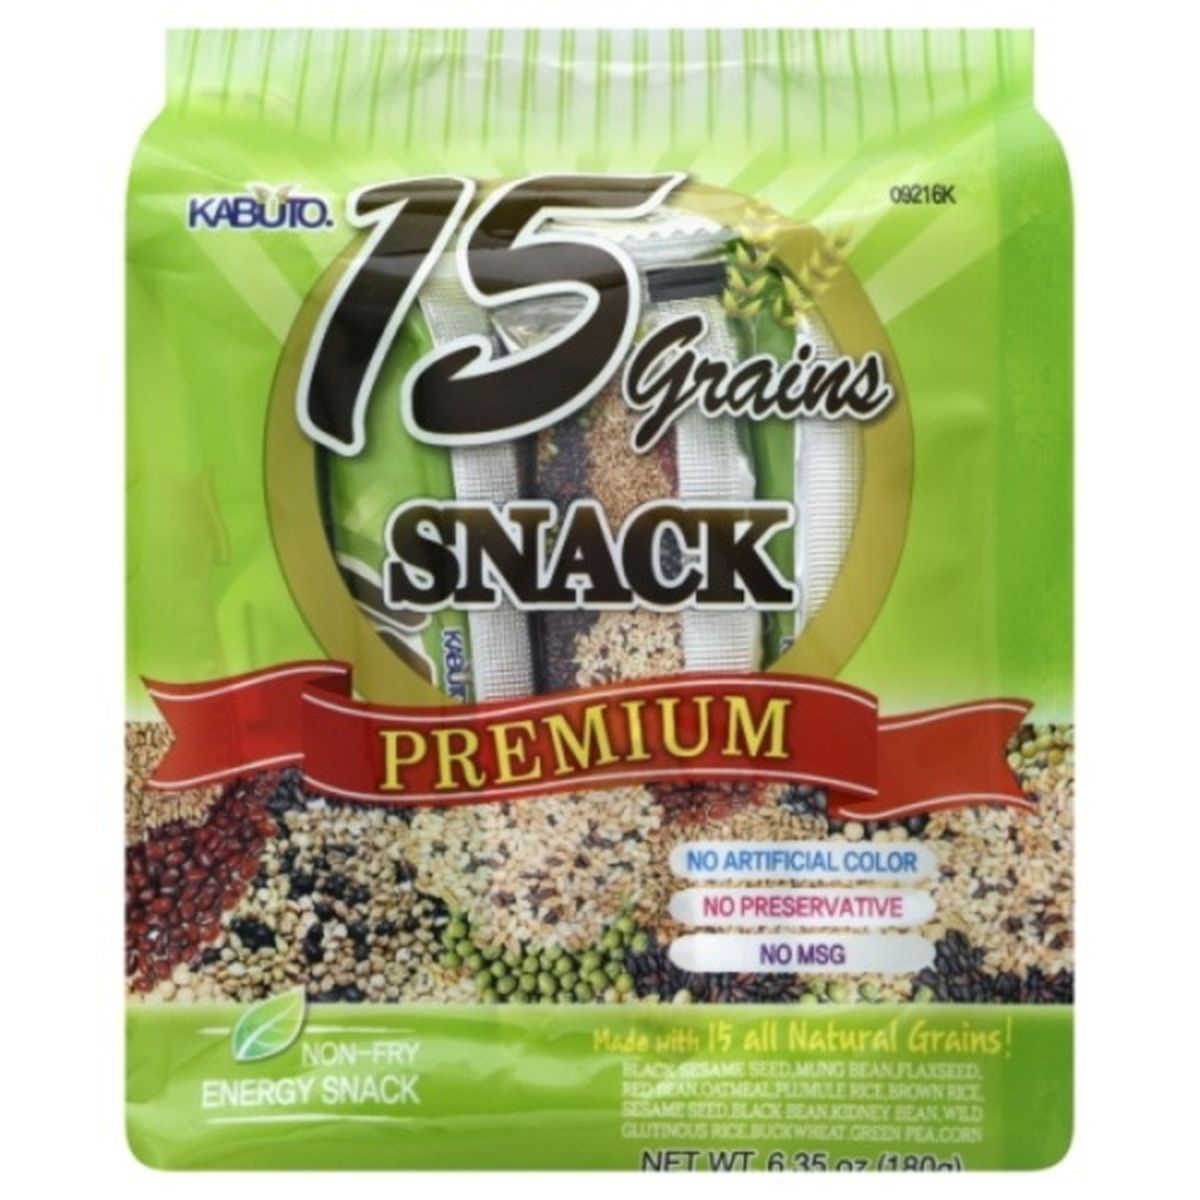 Calories in Kabuto 15 Grains Snack, Premium